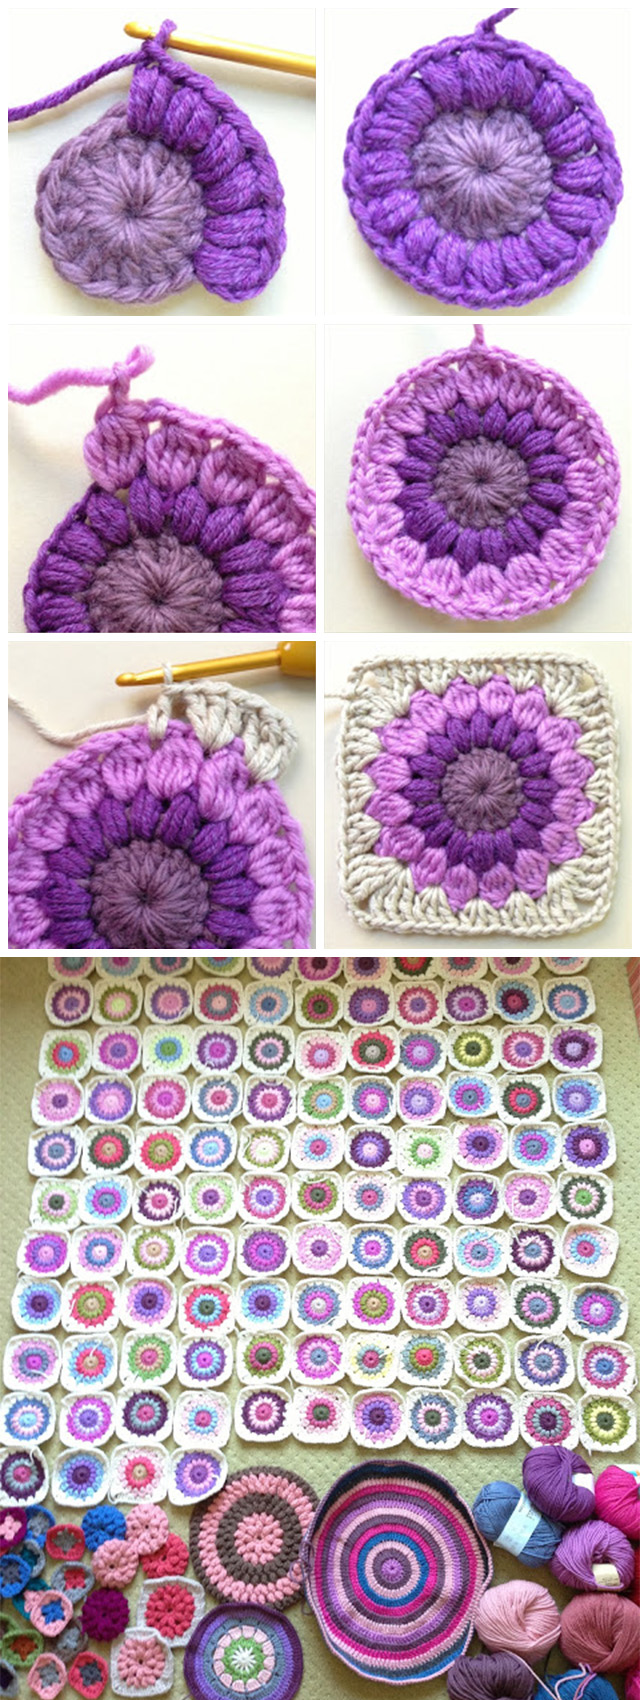 Sunburst Crochet Granny Square Pattern Tutorial